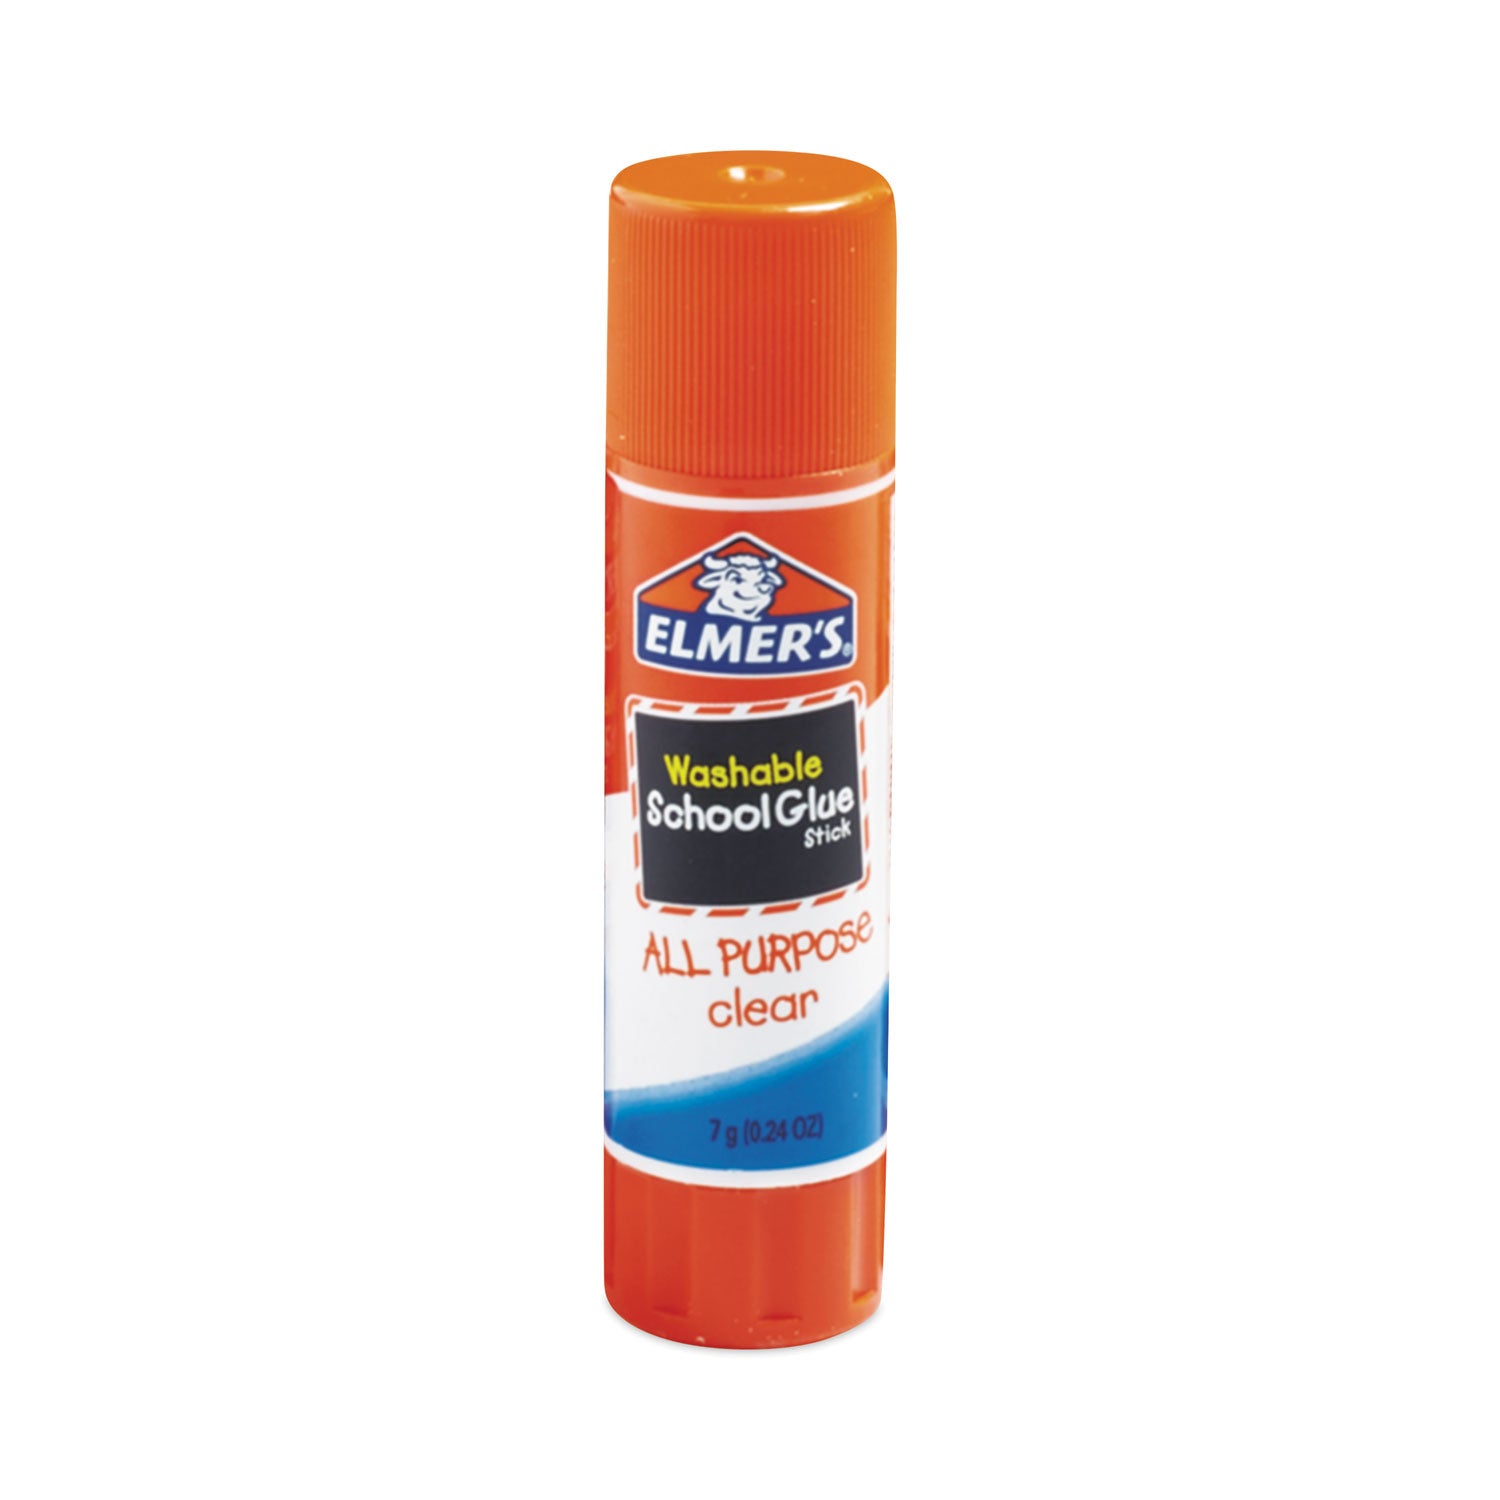 Washable School Glue Sticks, 0.24 oz, Applies and Dries Clear, 60/Box - 